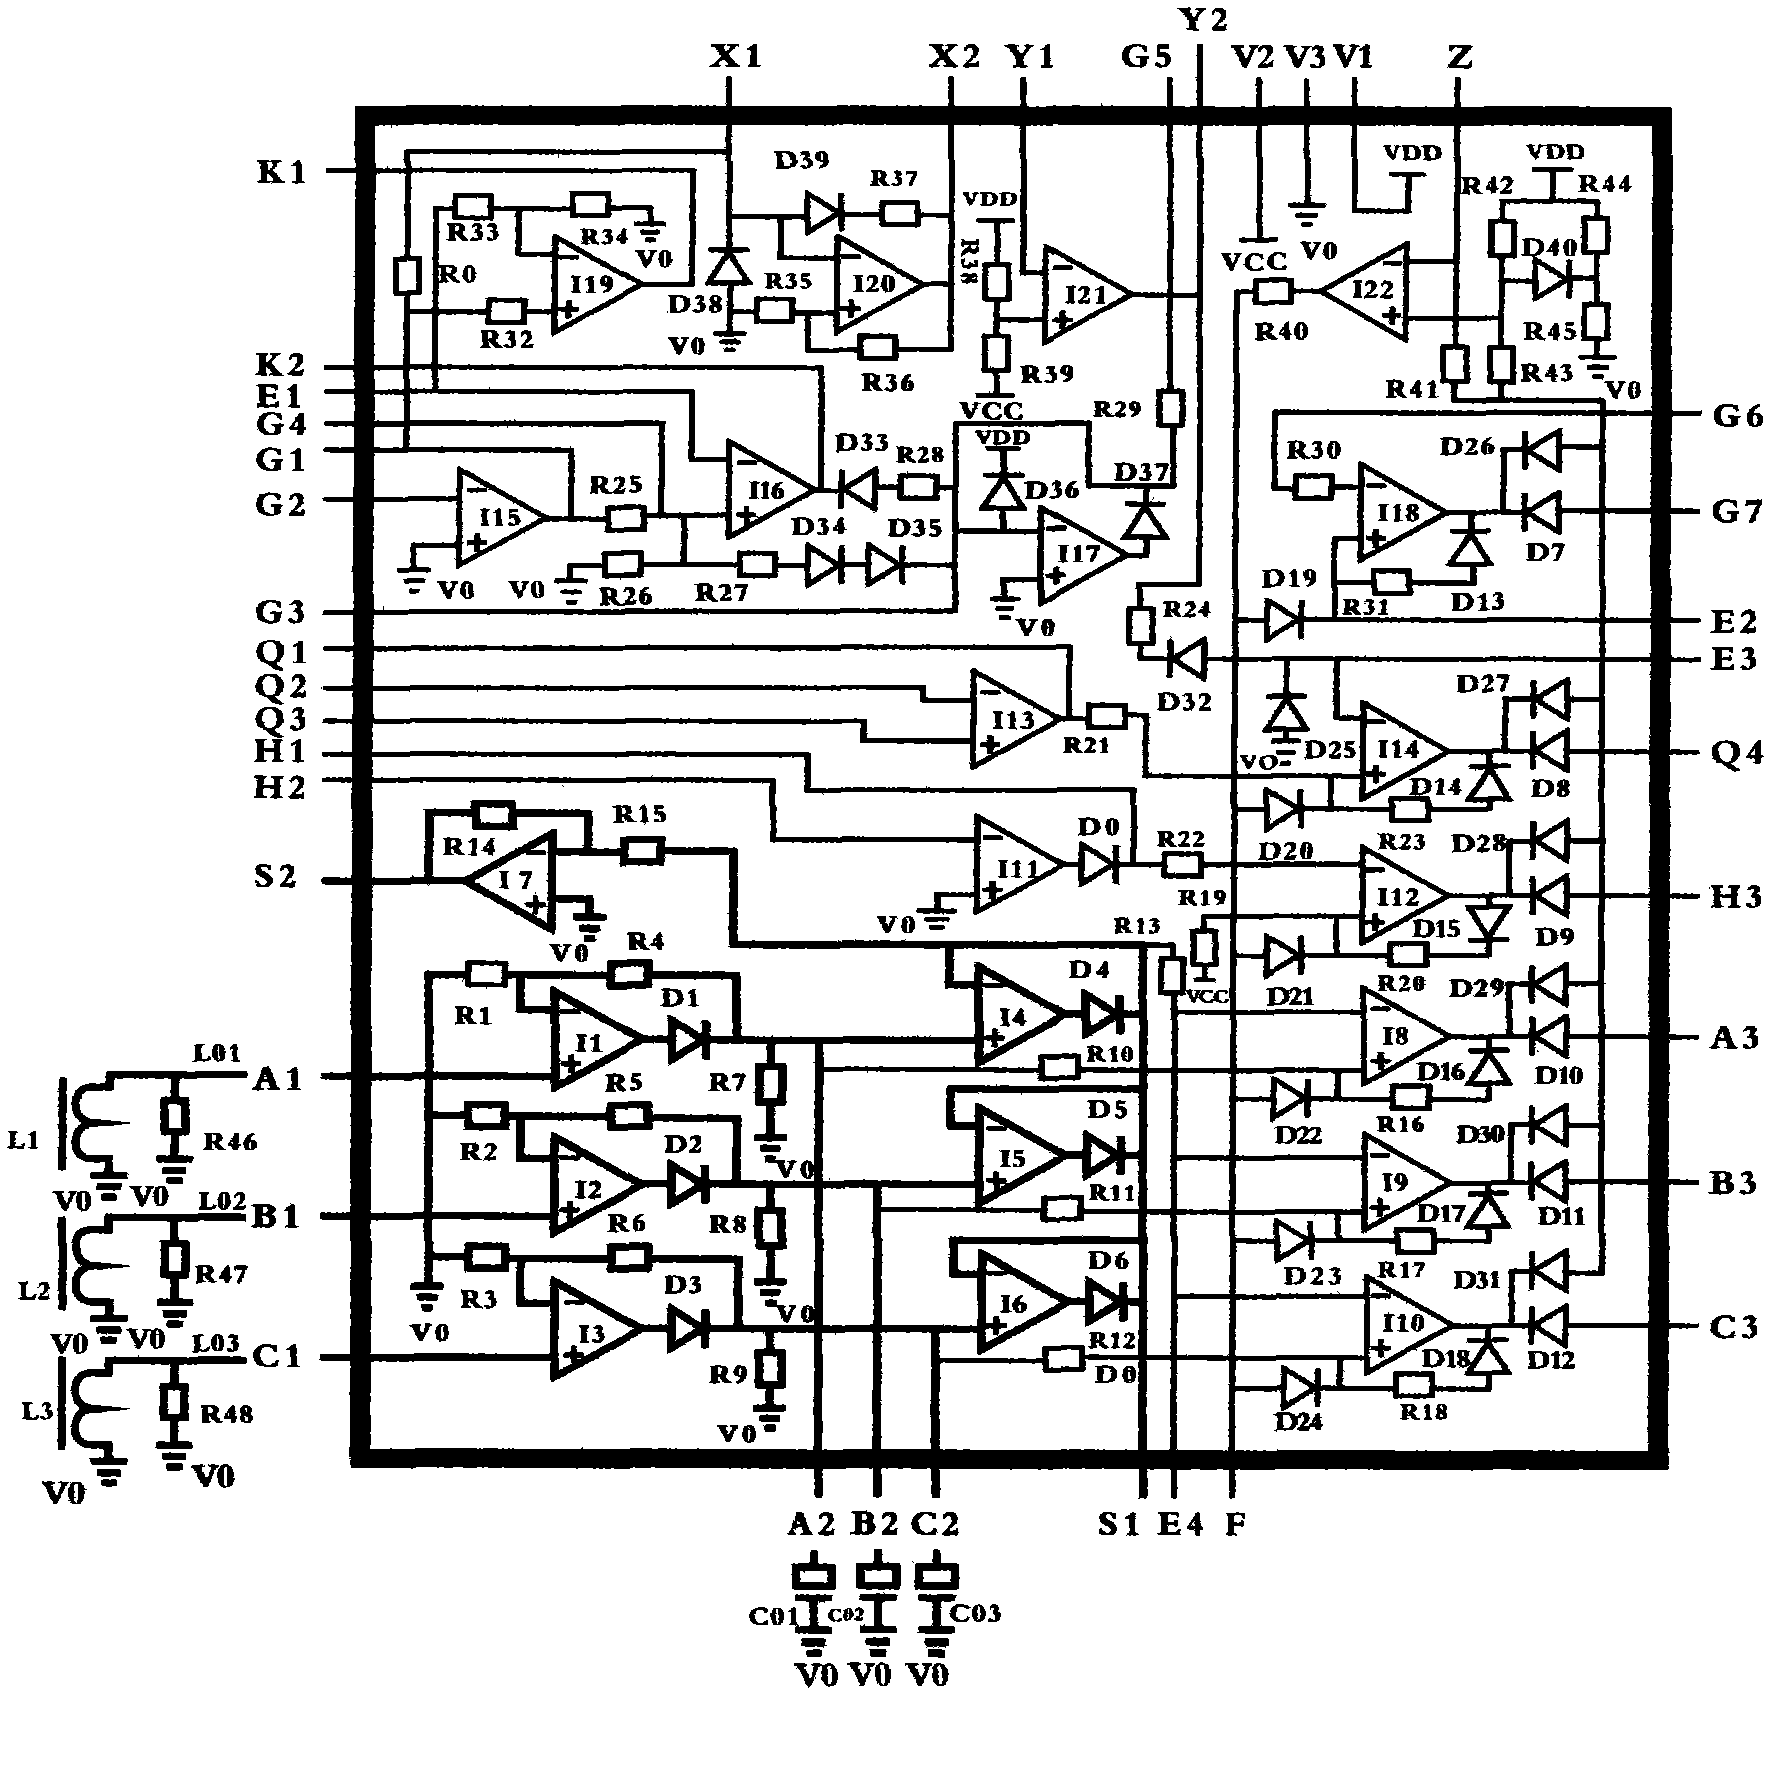 Universal protector analog integrated circuit